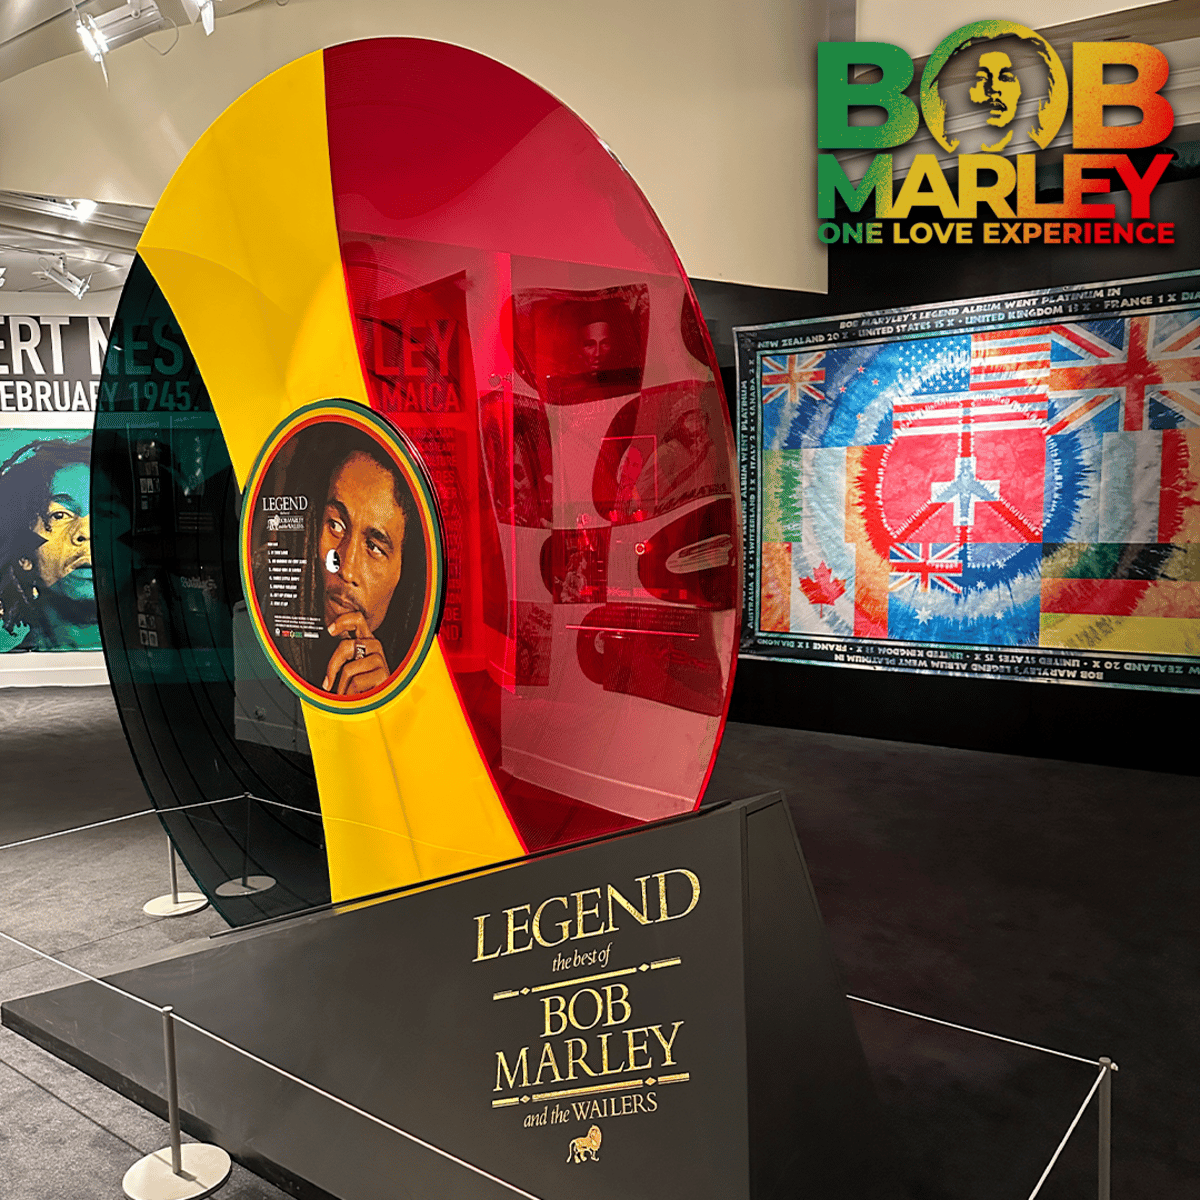 A massive vinyl record for Bob Marley's music